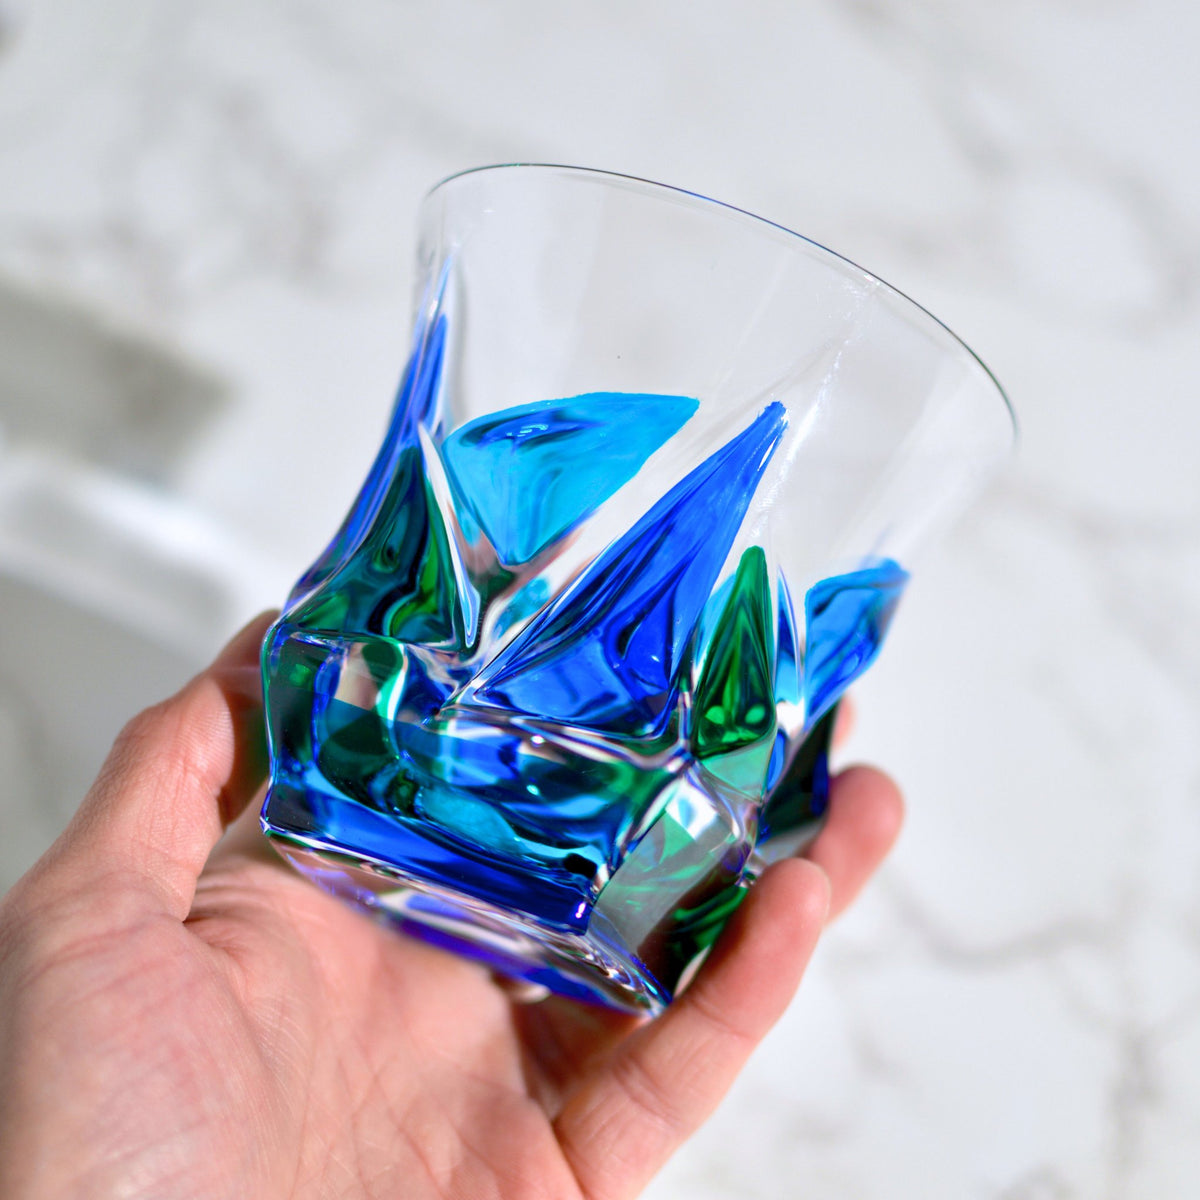 Italian Crystal Empress Drinking Glasses, Blue/Green Set of 2 - My Italian Decor